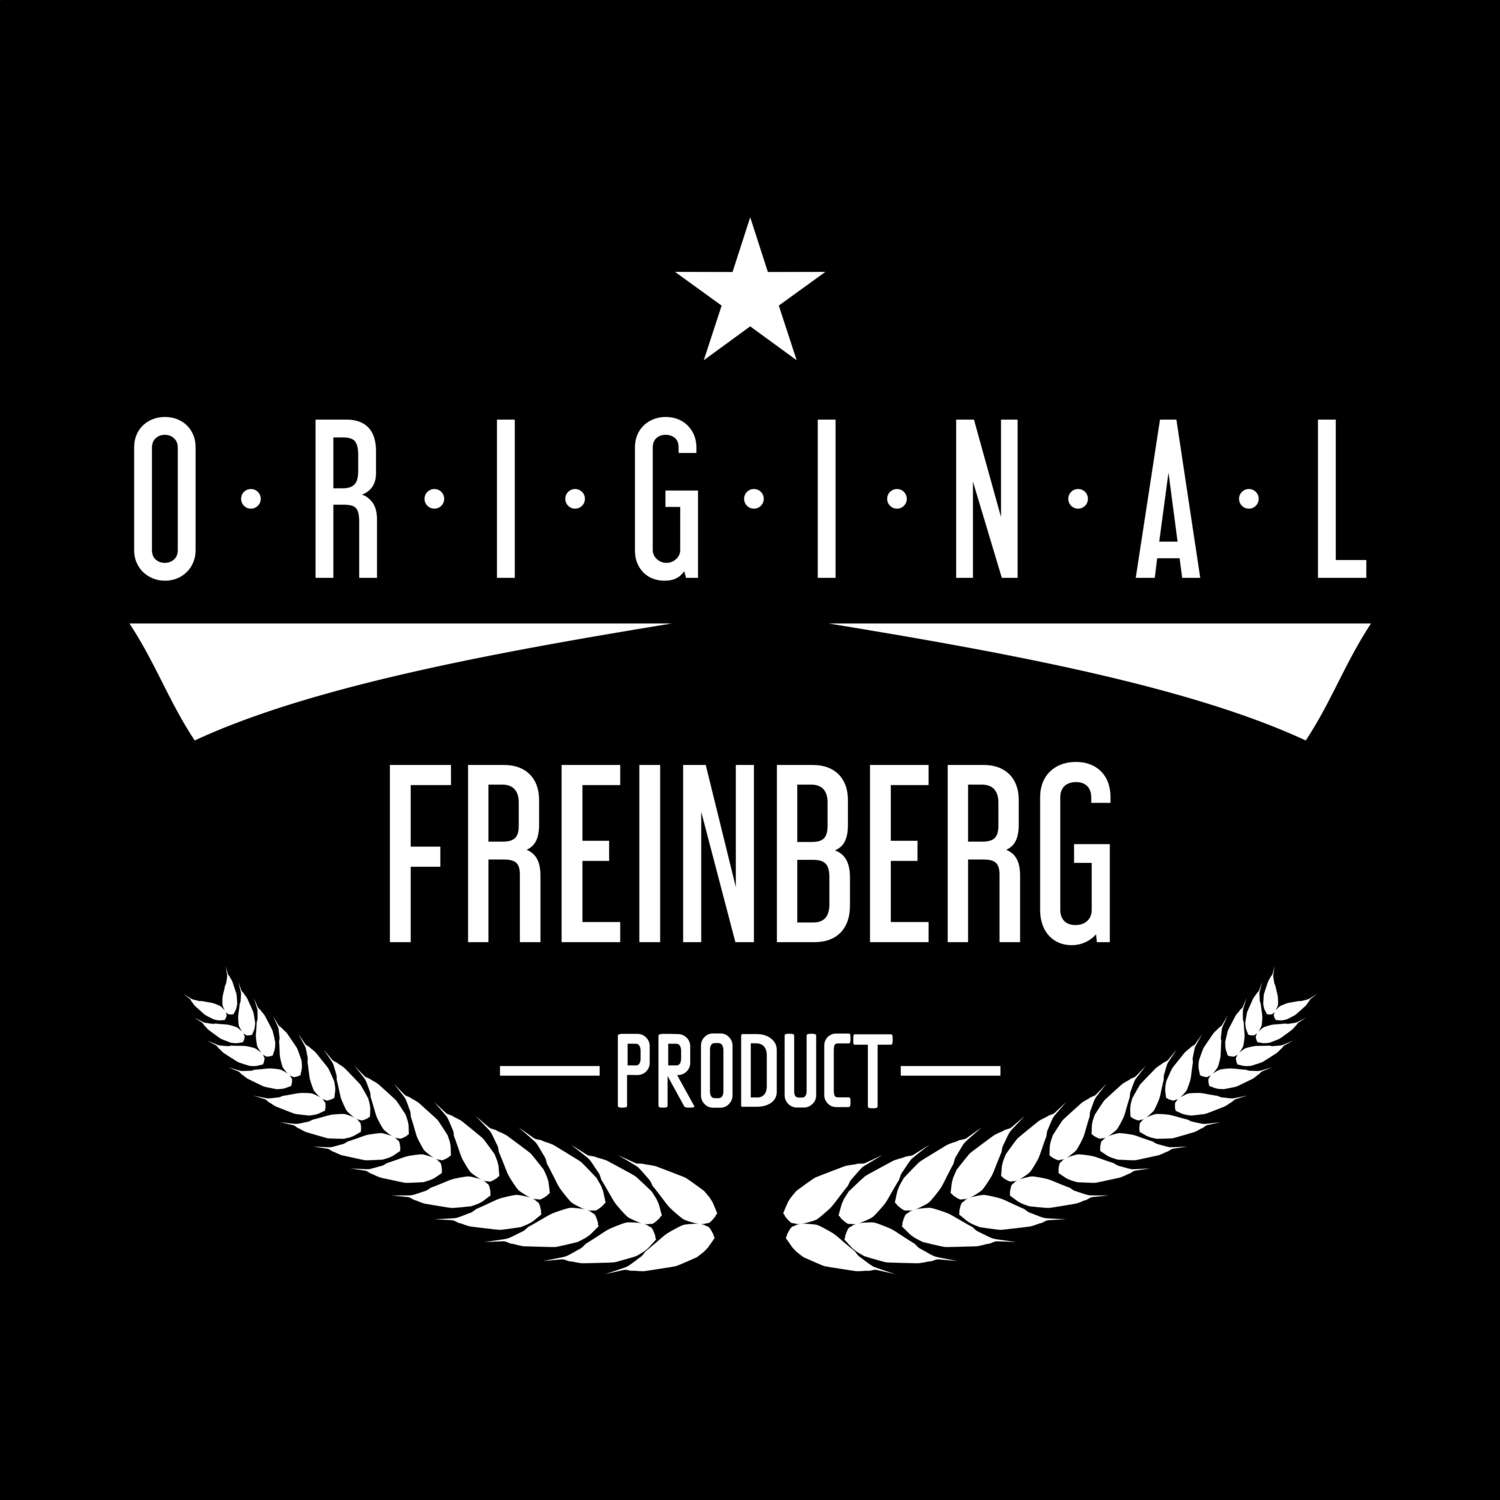 Freinberg T-Shirt »Original Product«